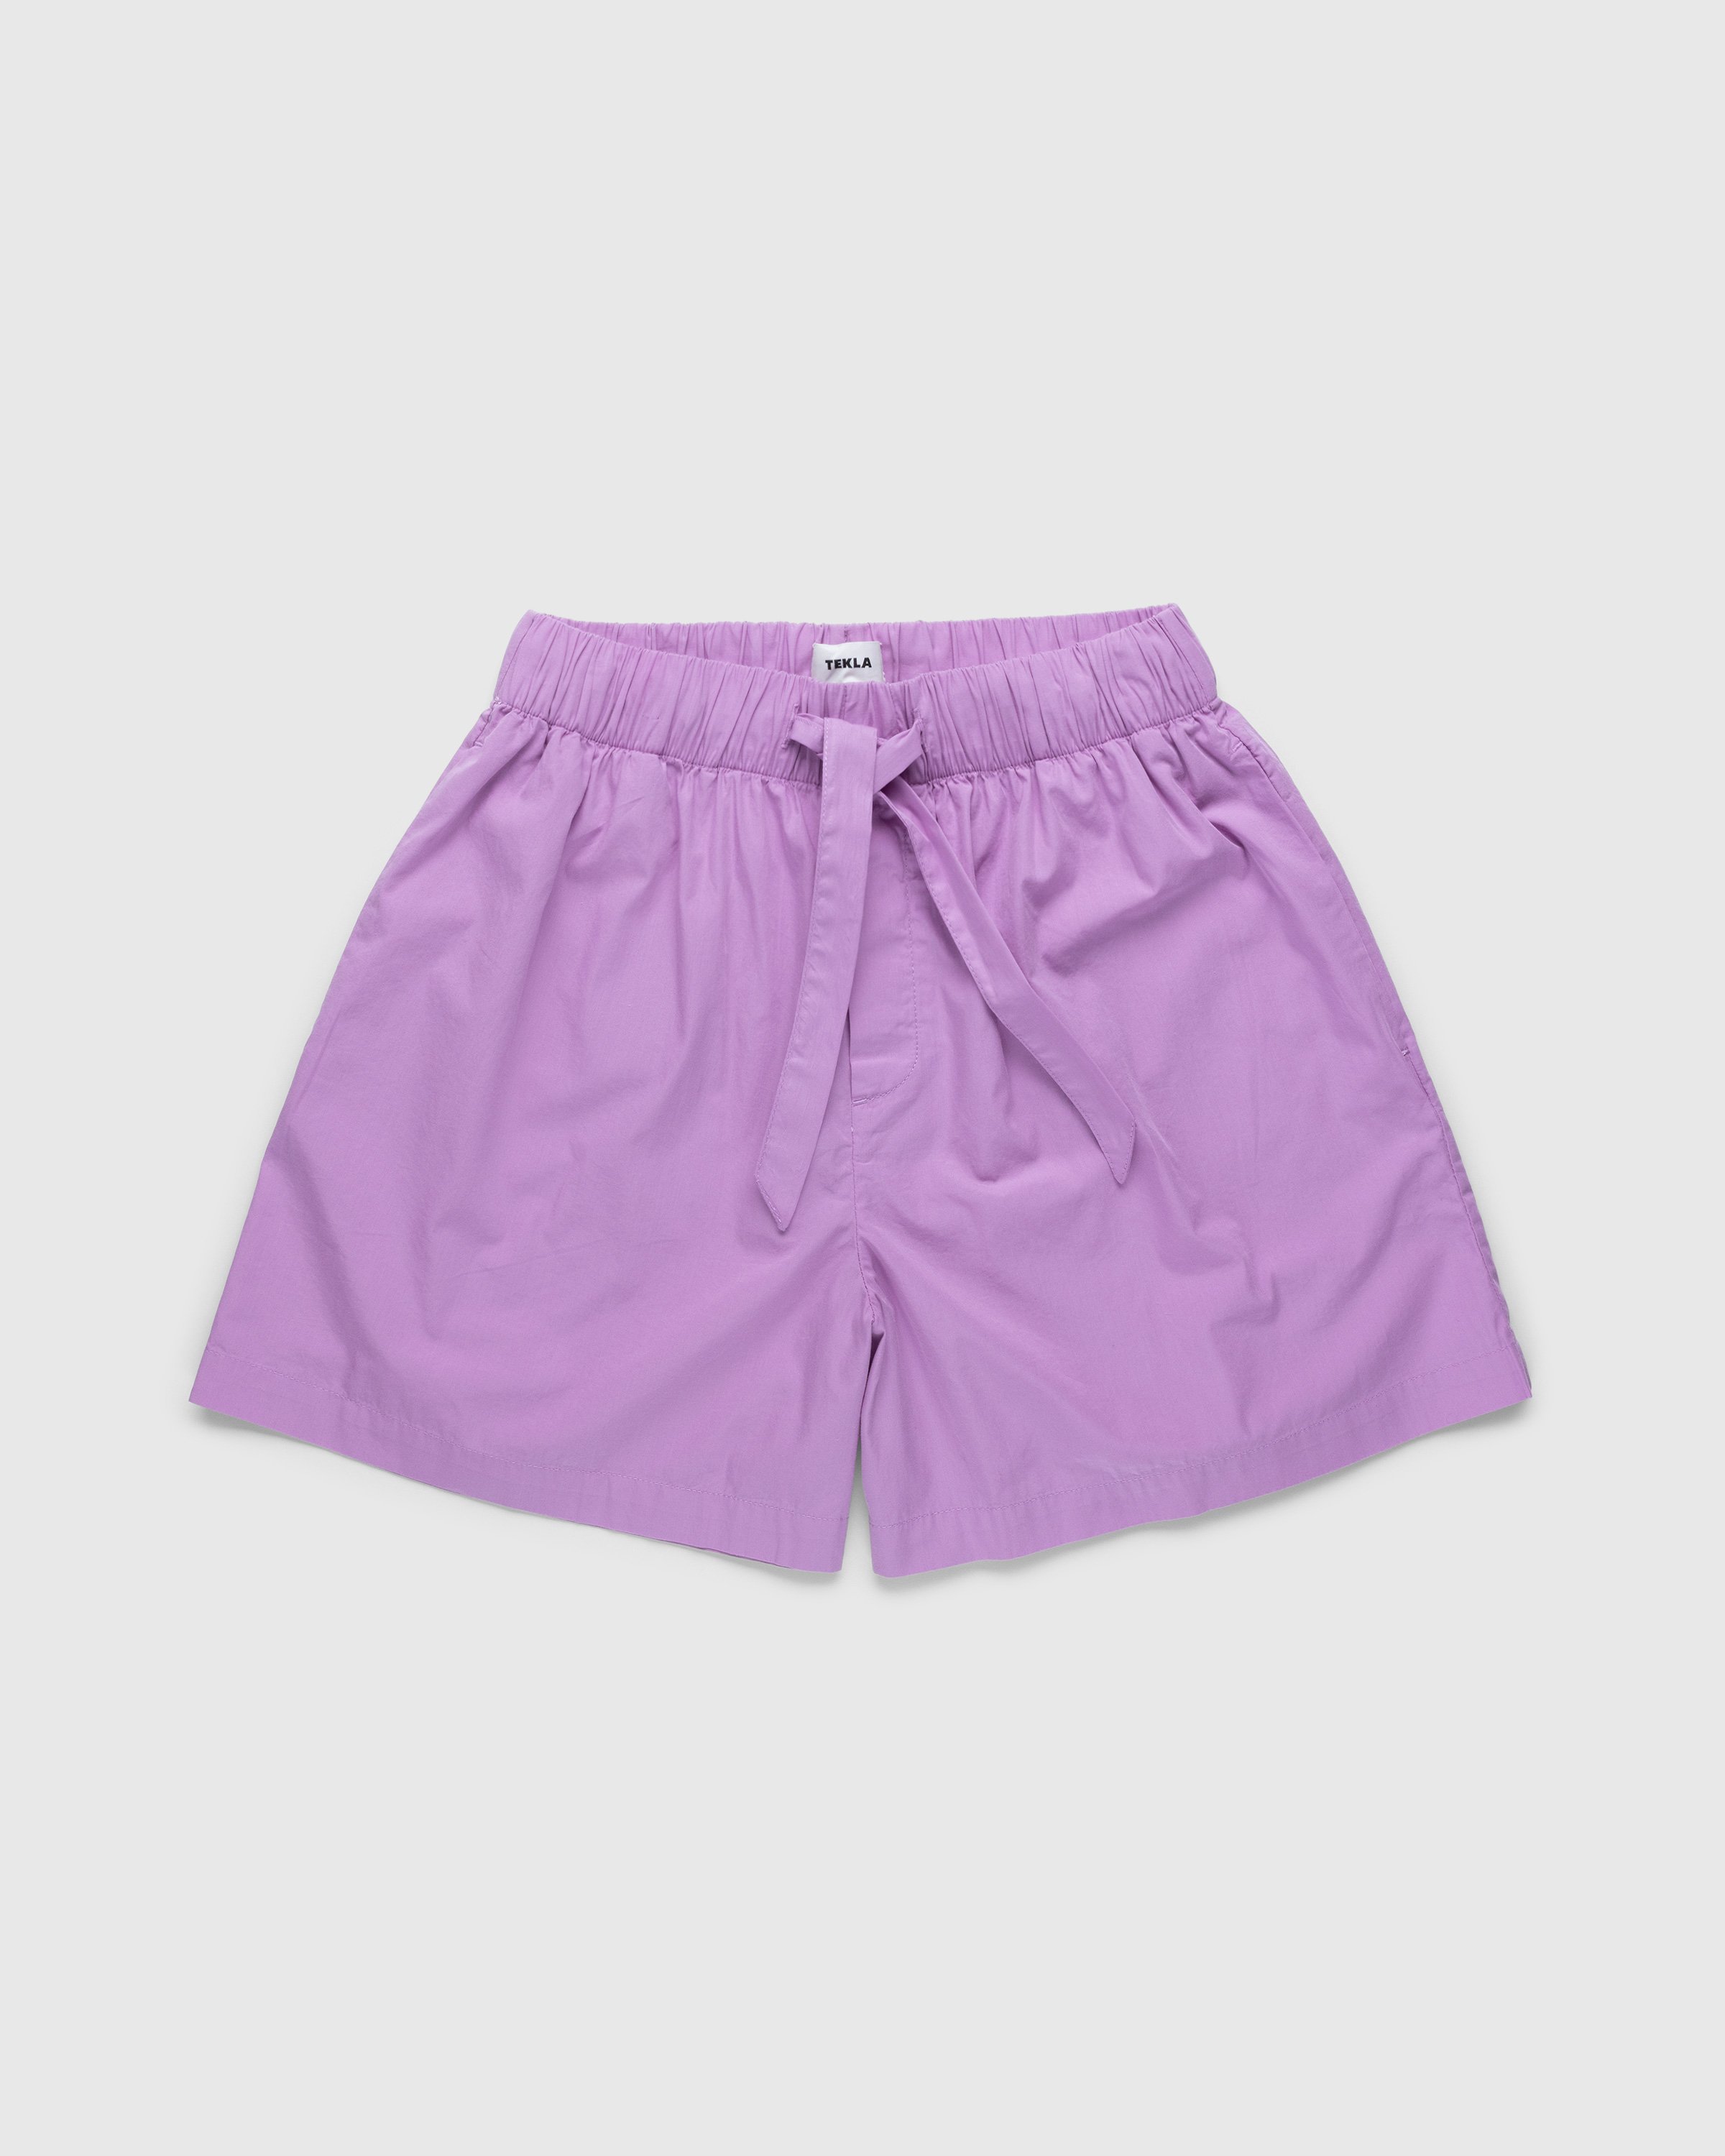 Tekla - Cotton Poplin Pyjamas Shorts Purple Pink - Clothing - Pink - Image 1